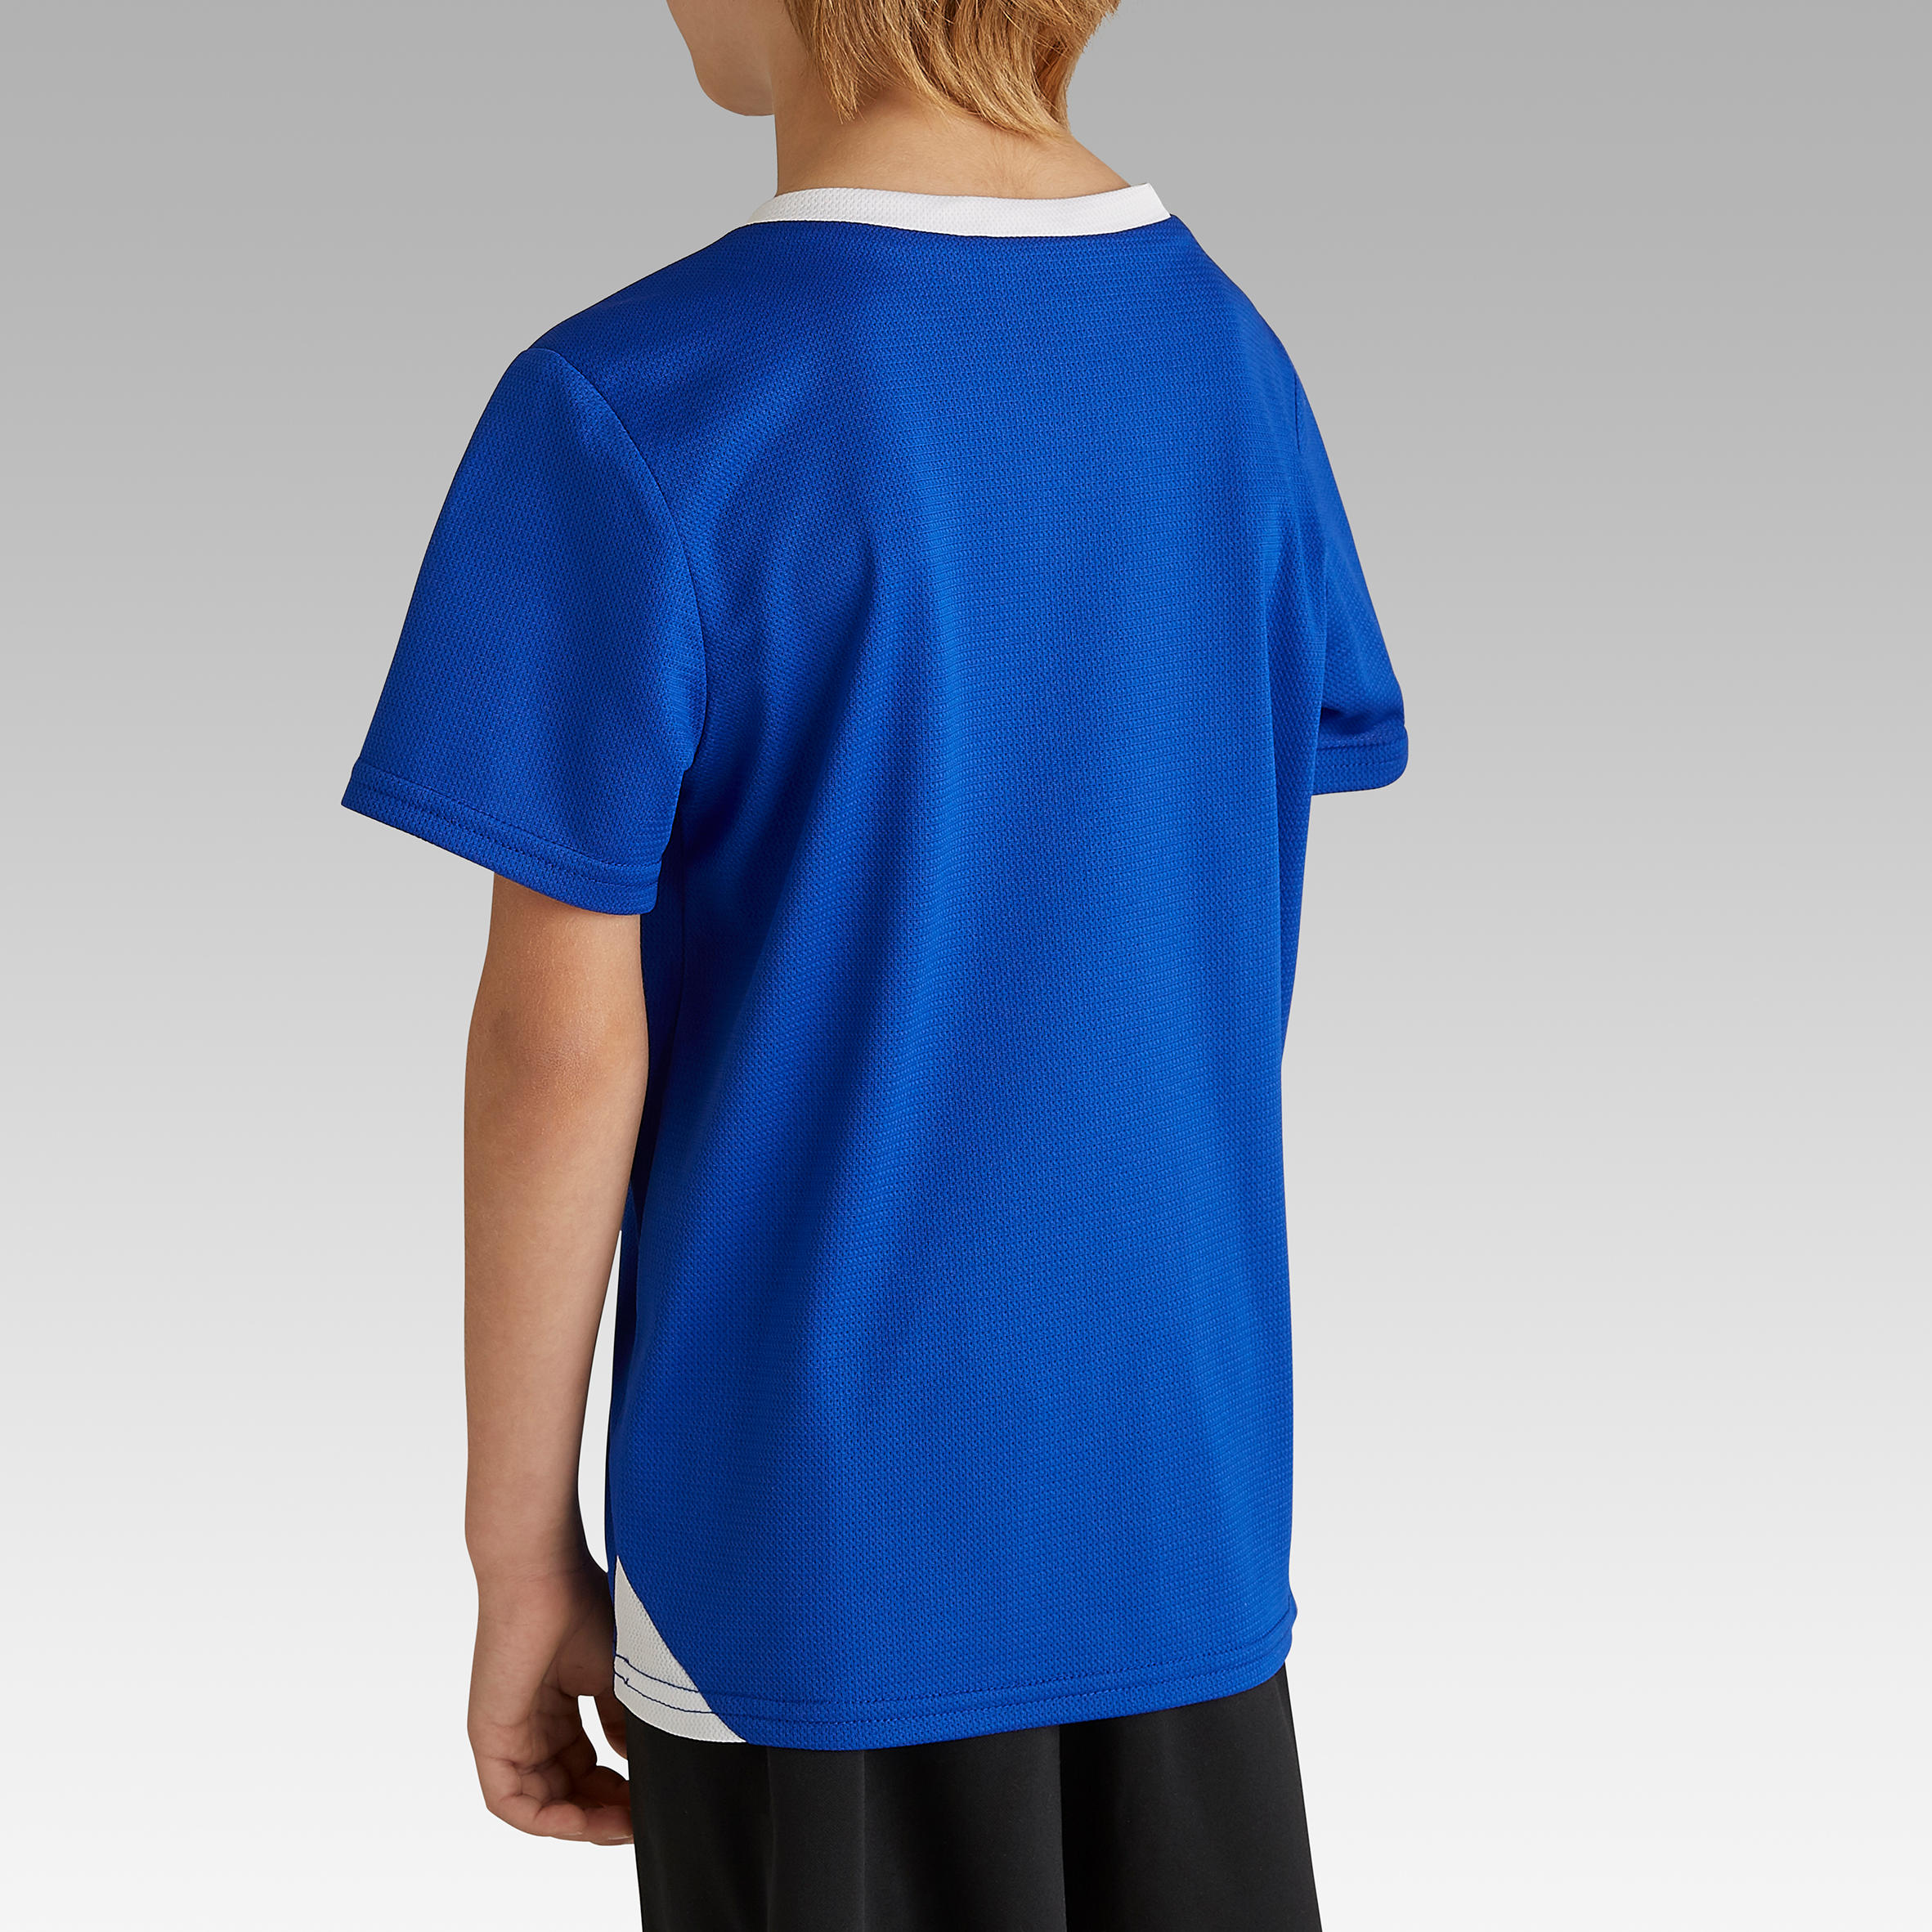 F100 Kids' Football Shirt - Indigo Blue 5/8